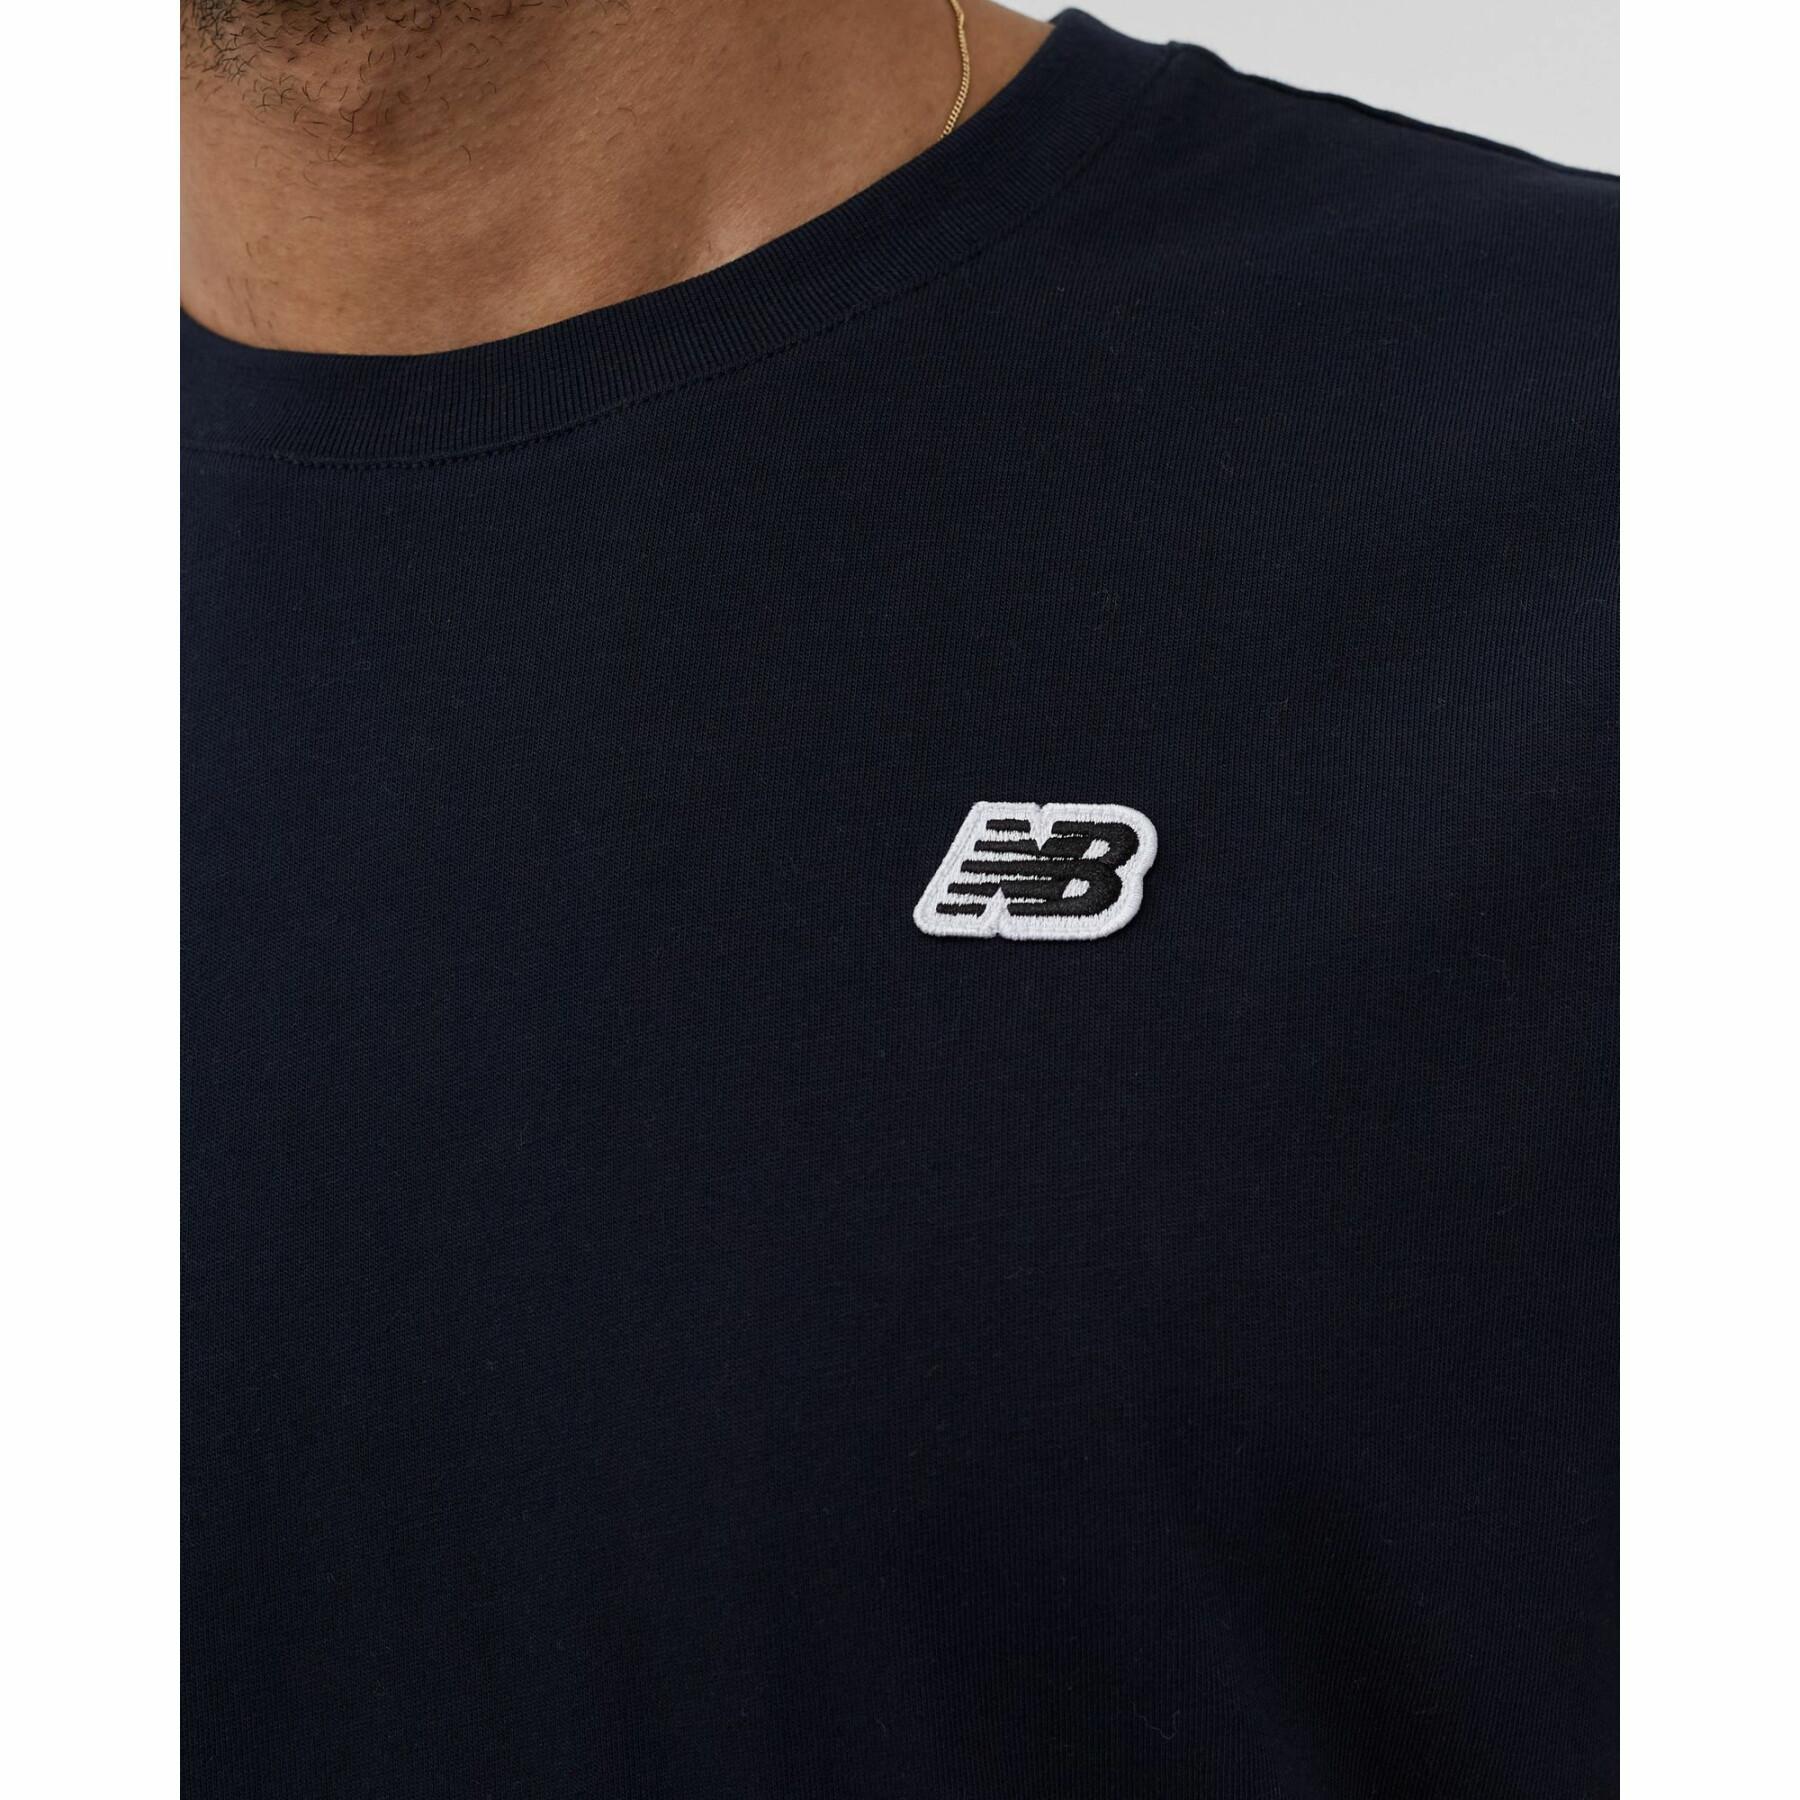 Koszulka New Balance Logo